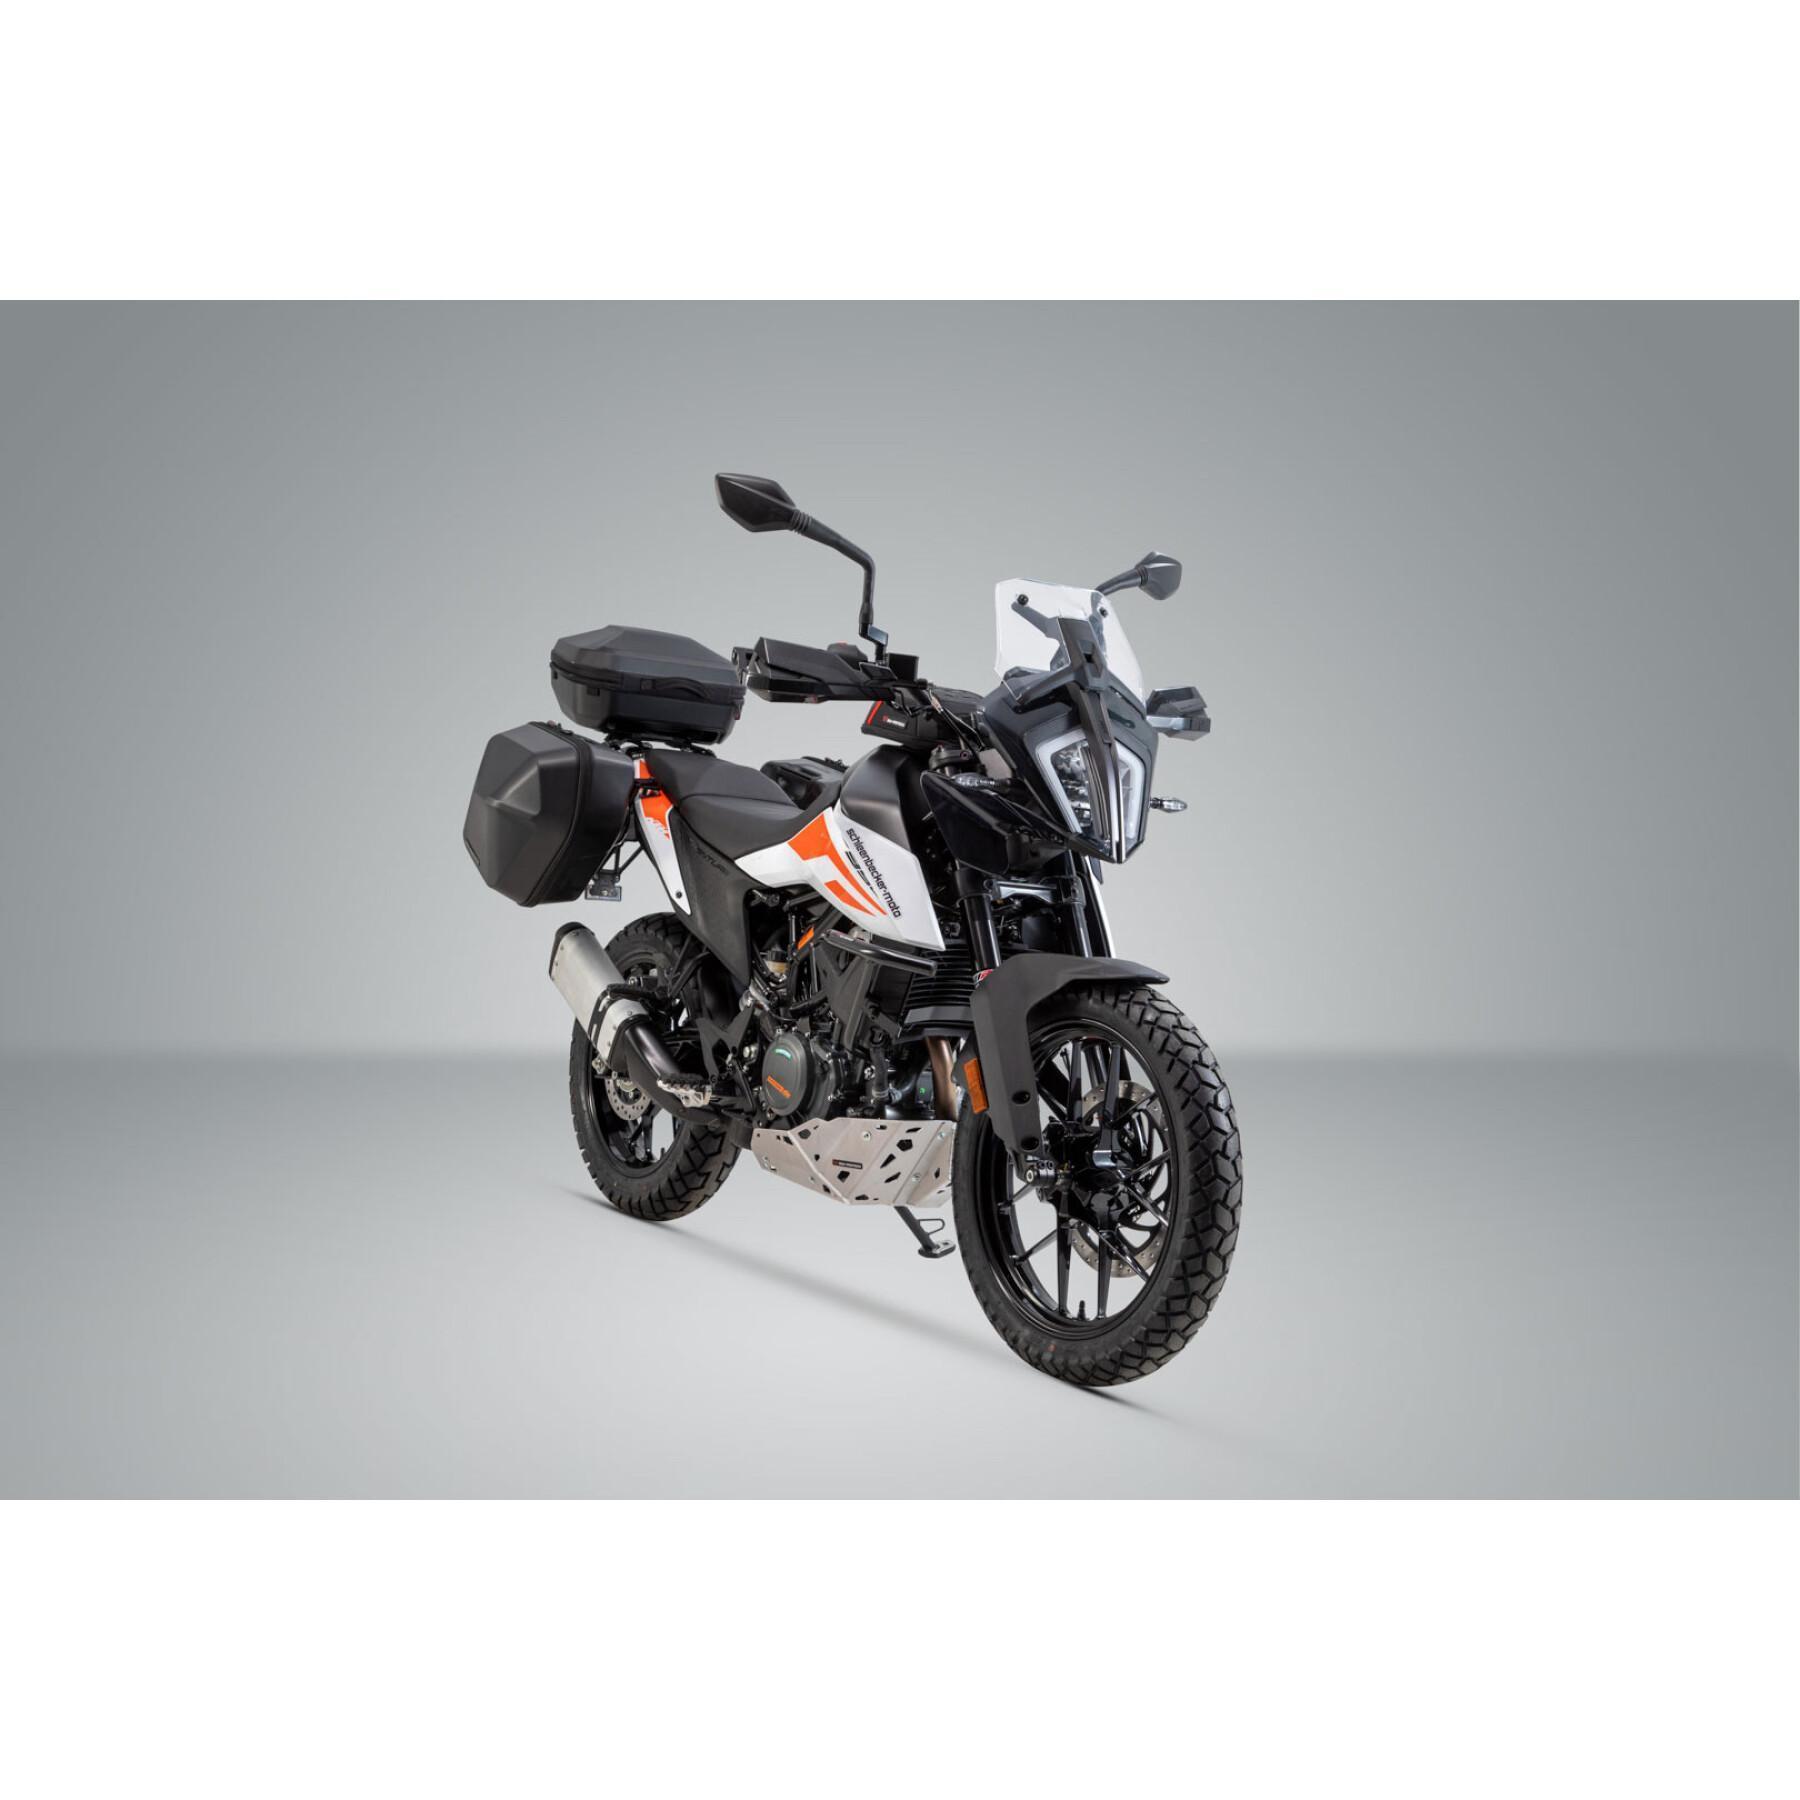 Kit protección moto aventura SW-Motech KTM 390 Adventure (19-)